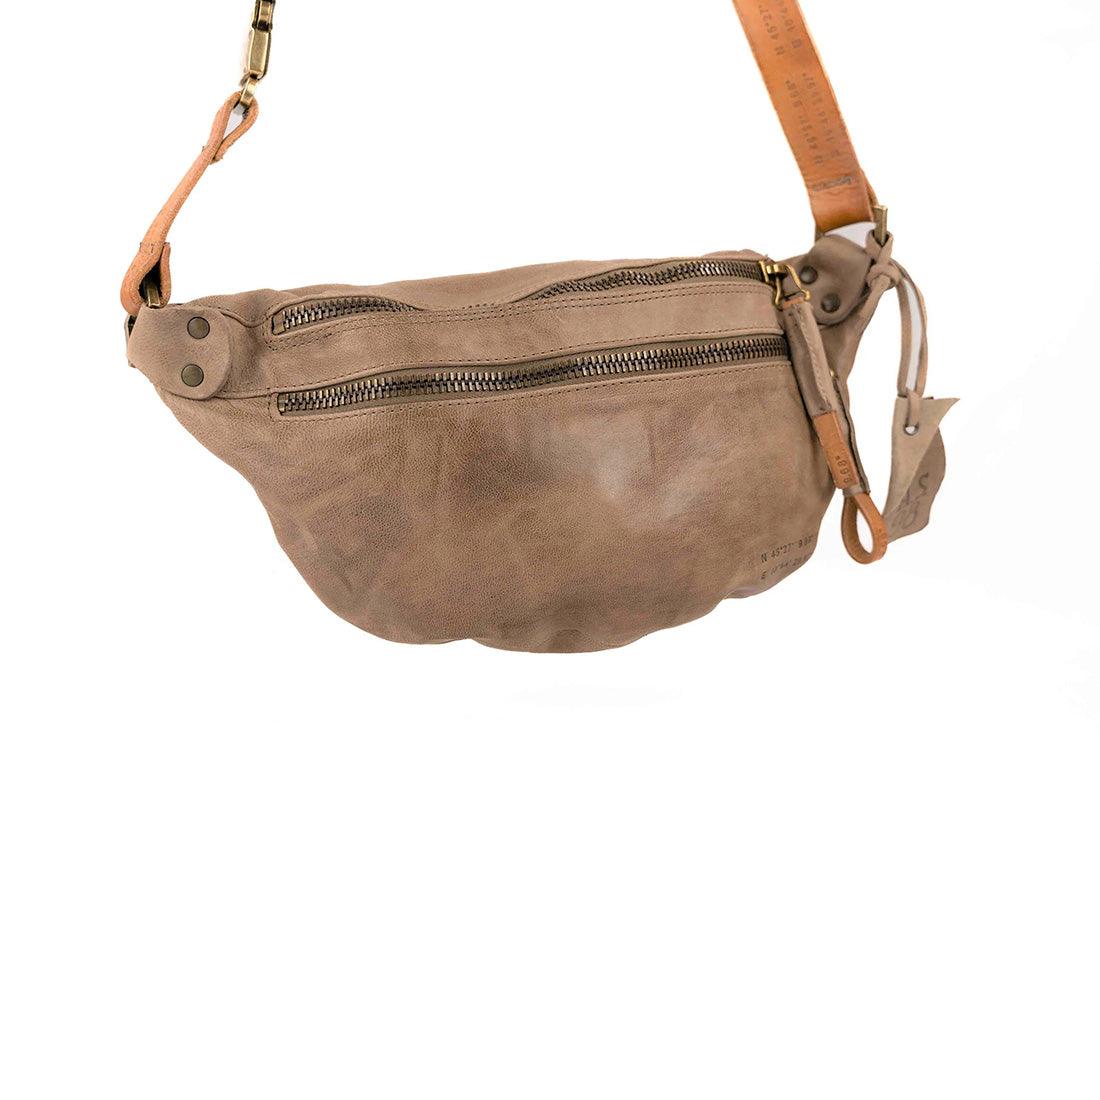 Hoffman Sling - A.S. 98 - Handbags